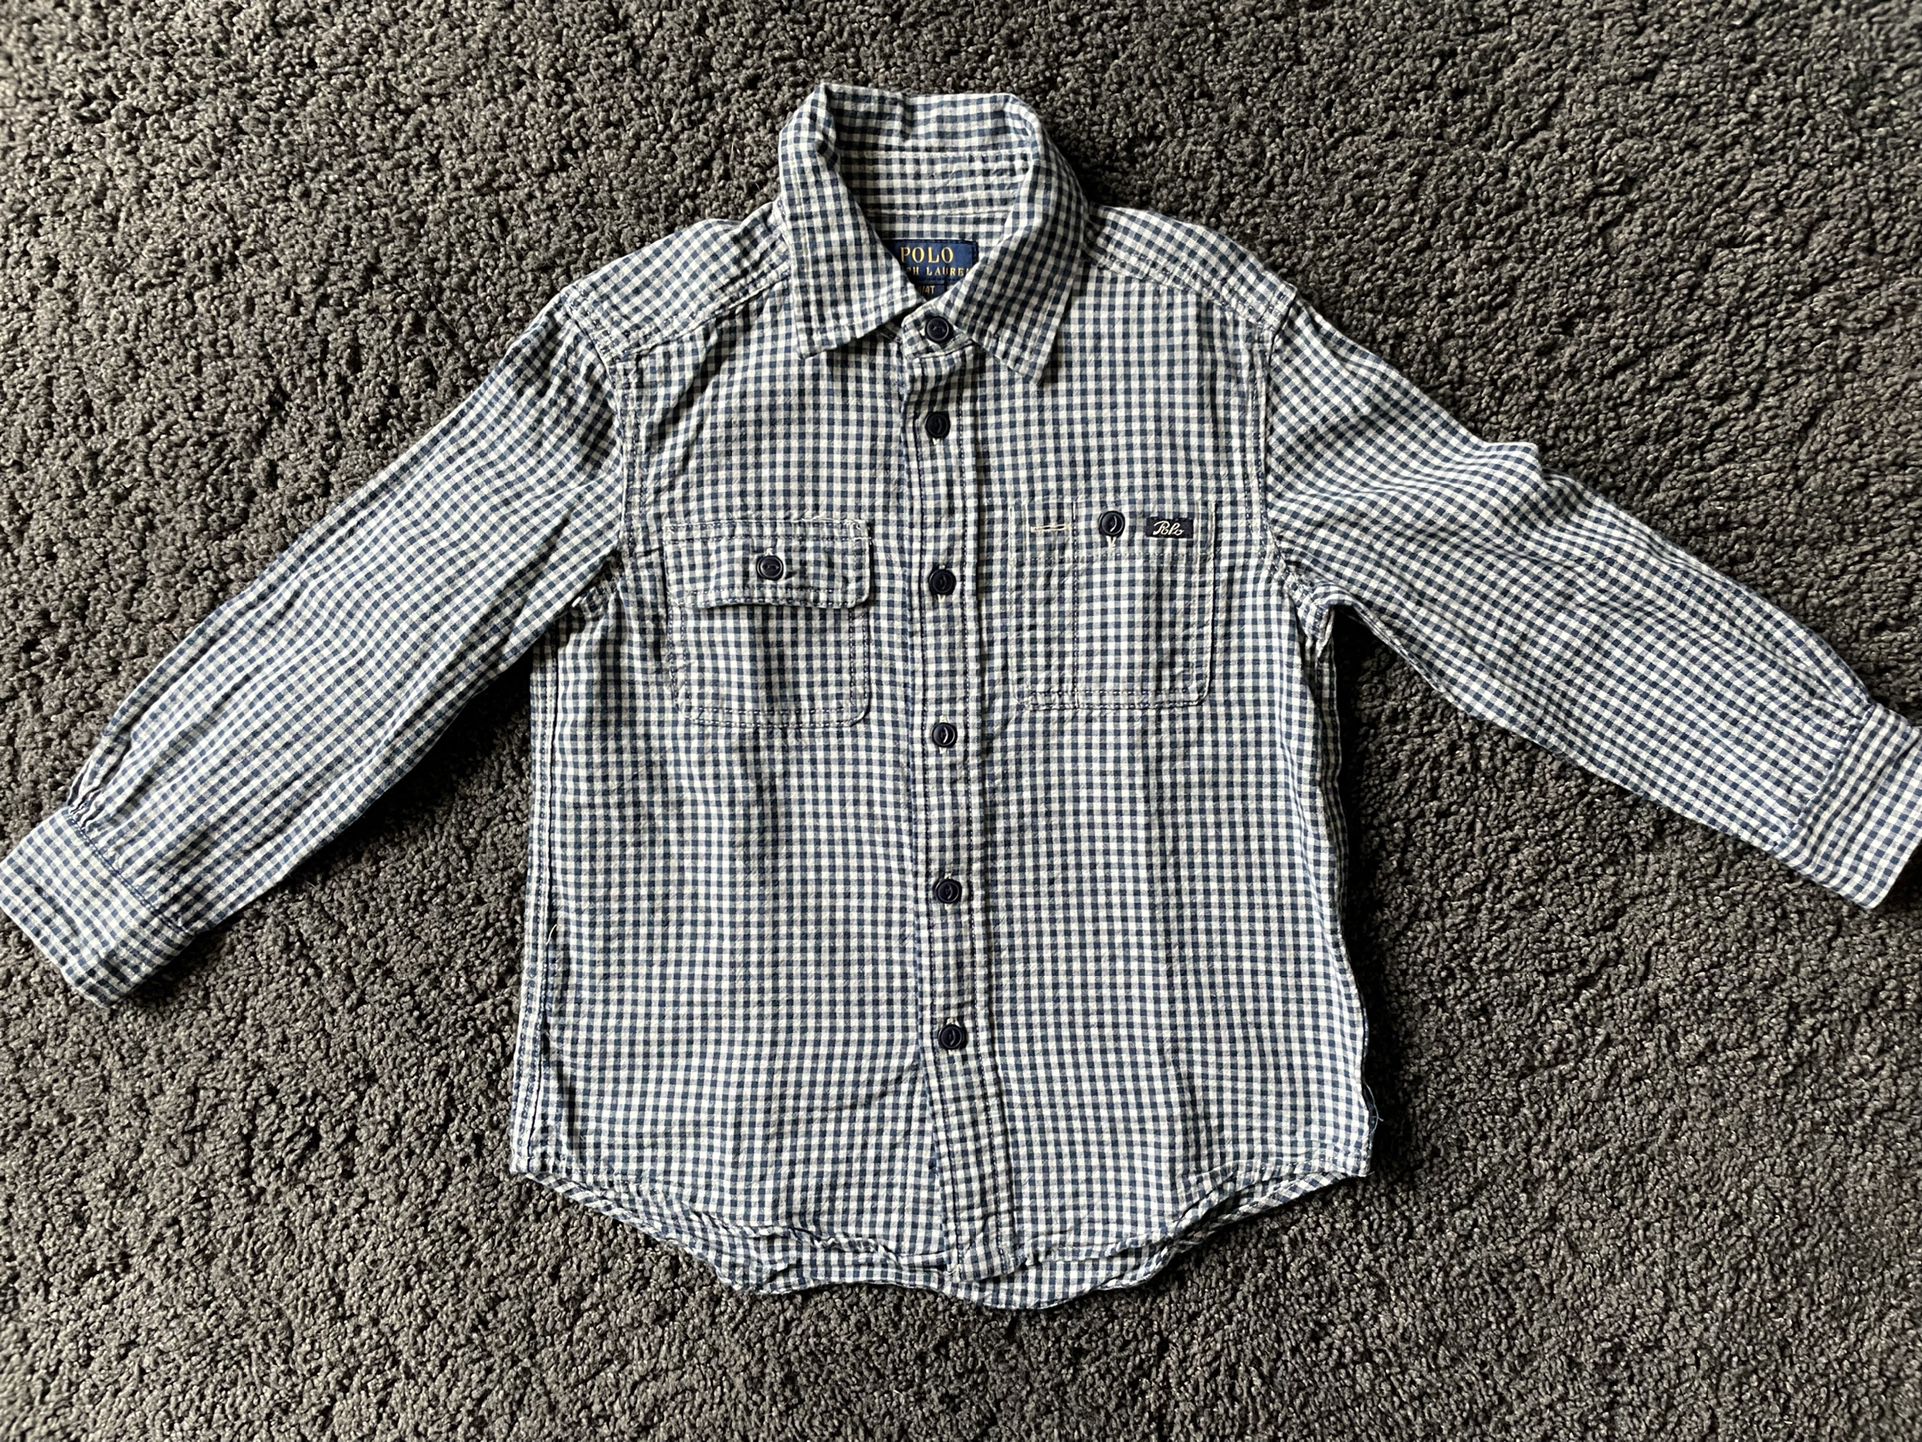 Boys Long Sleeve Button Down Shirt, Size 4 From Polo Ralph Lauren 